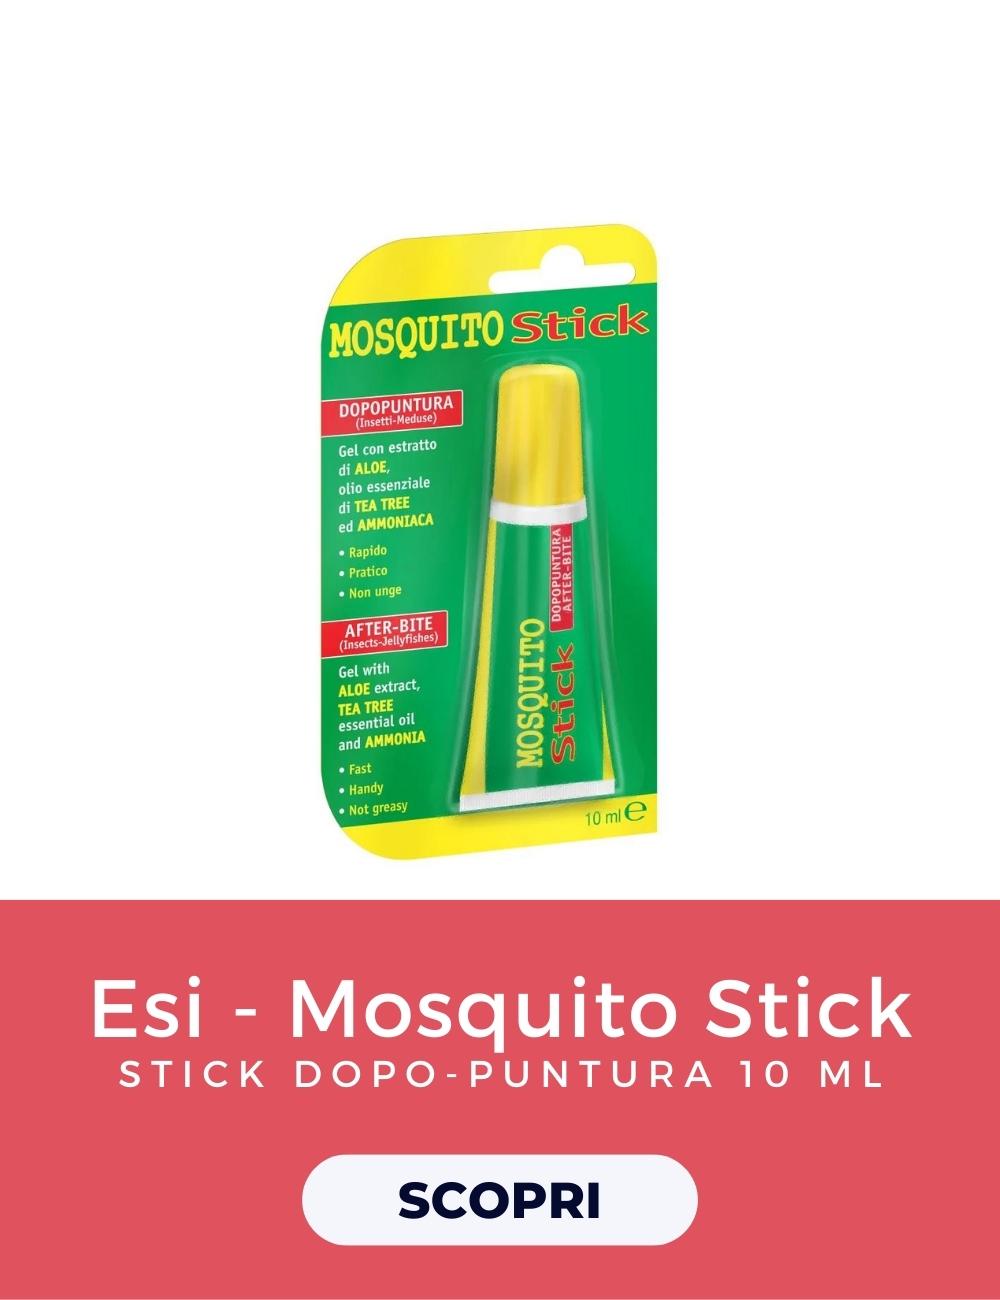 Esi mosquito stick